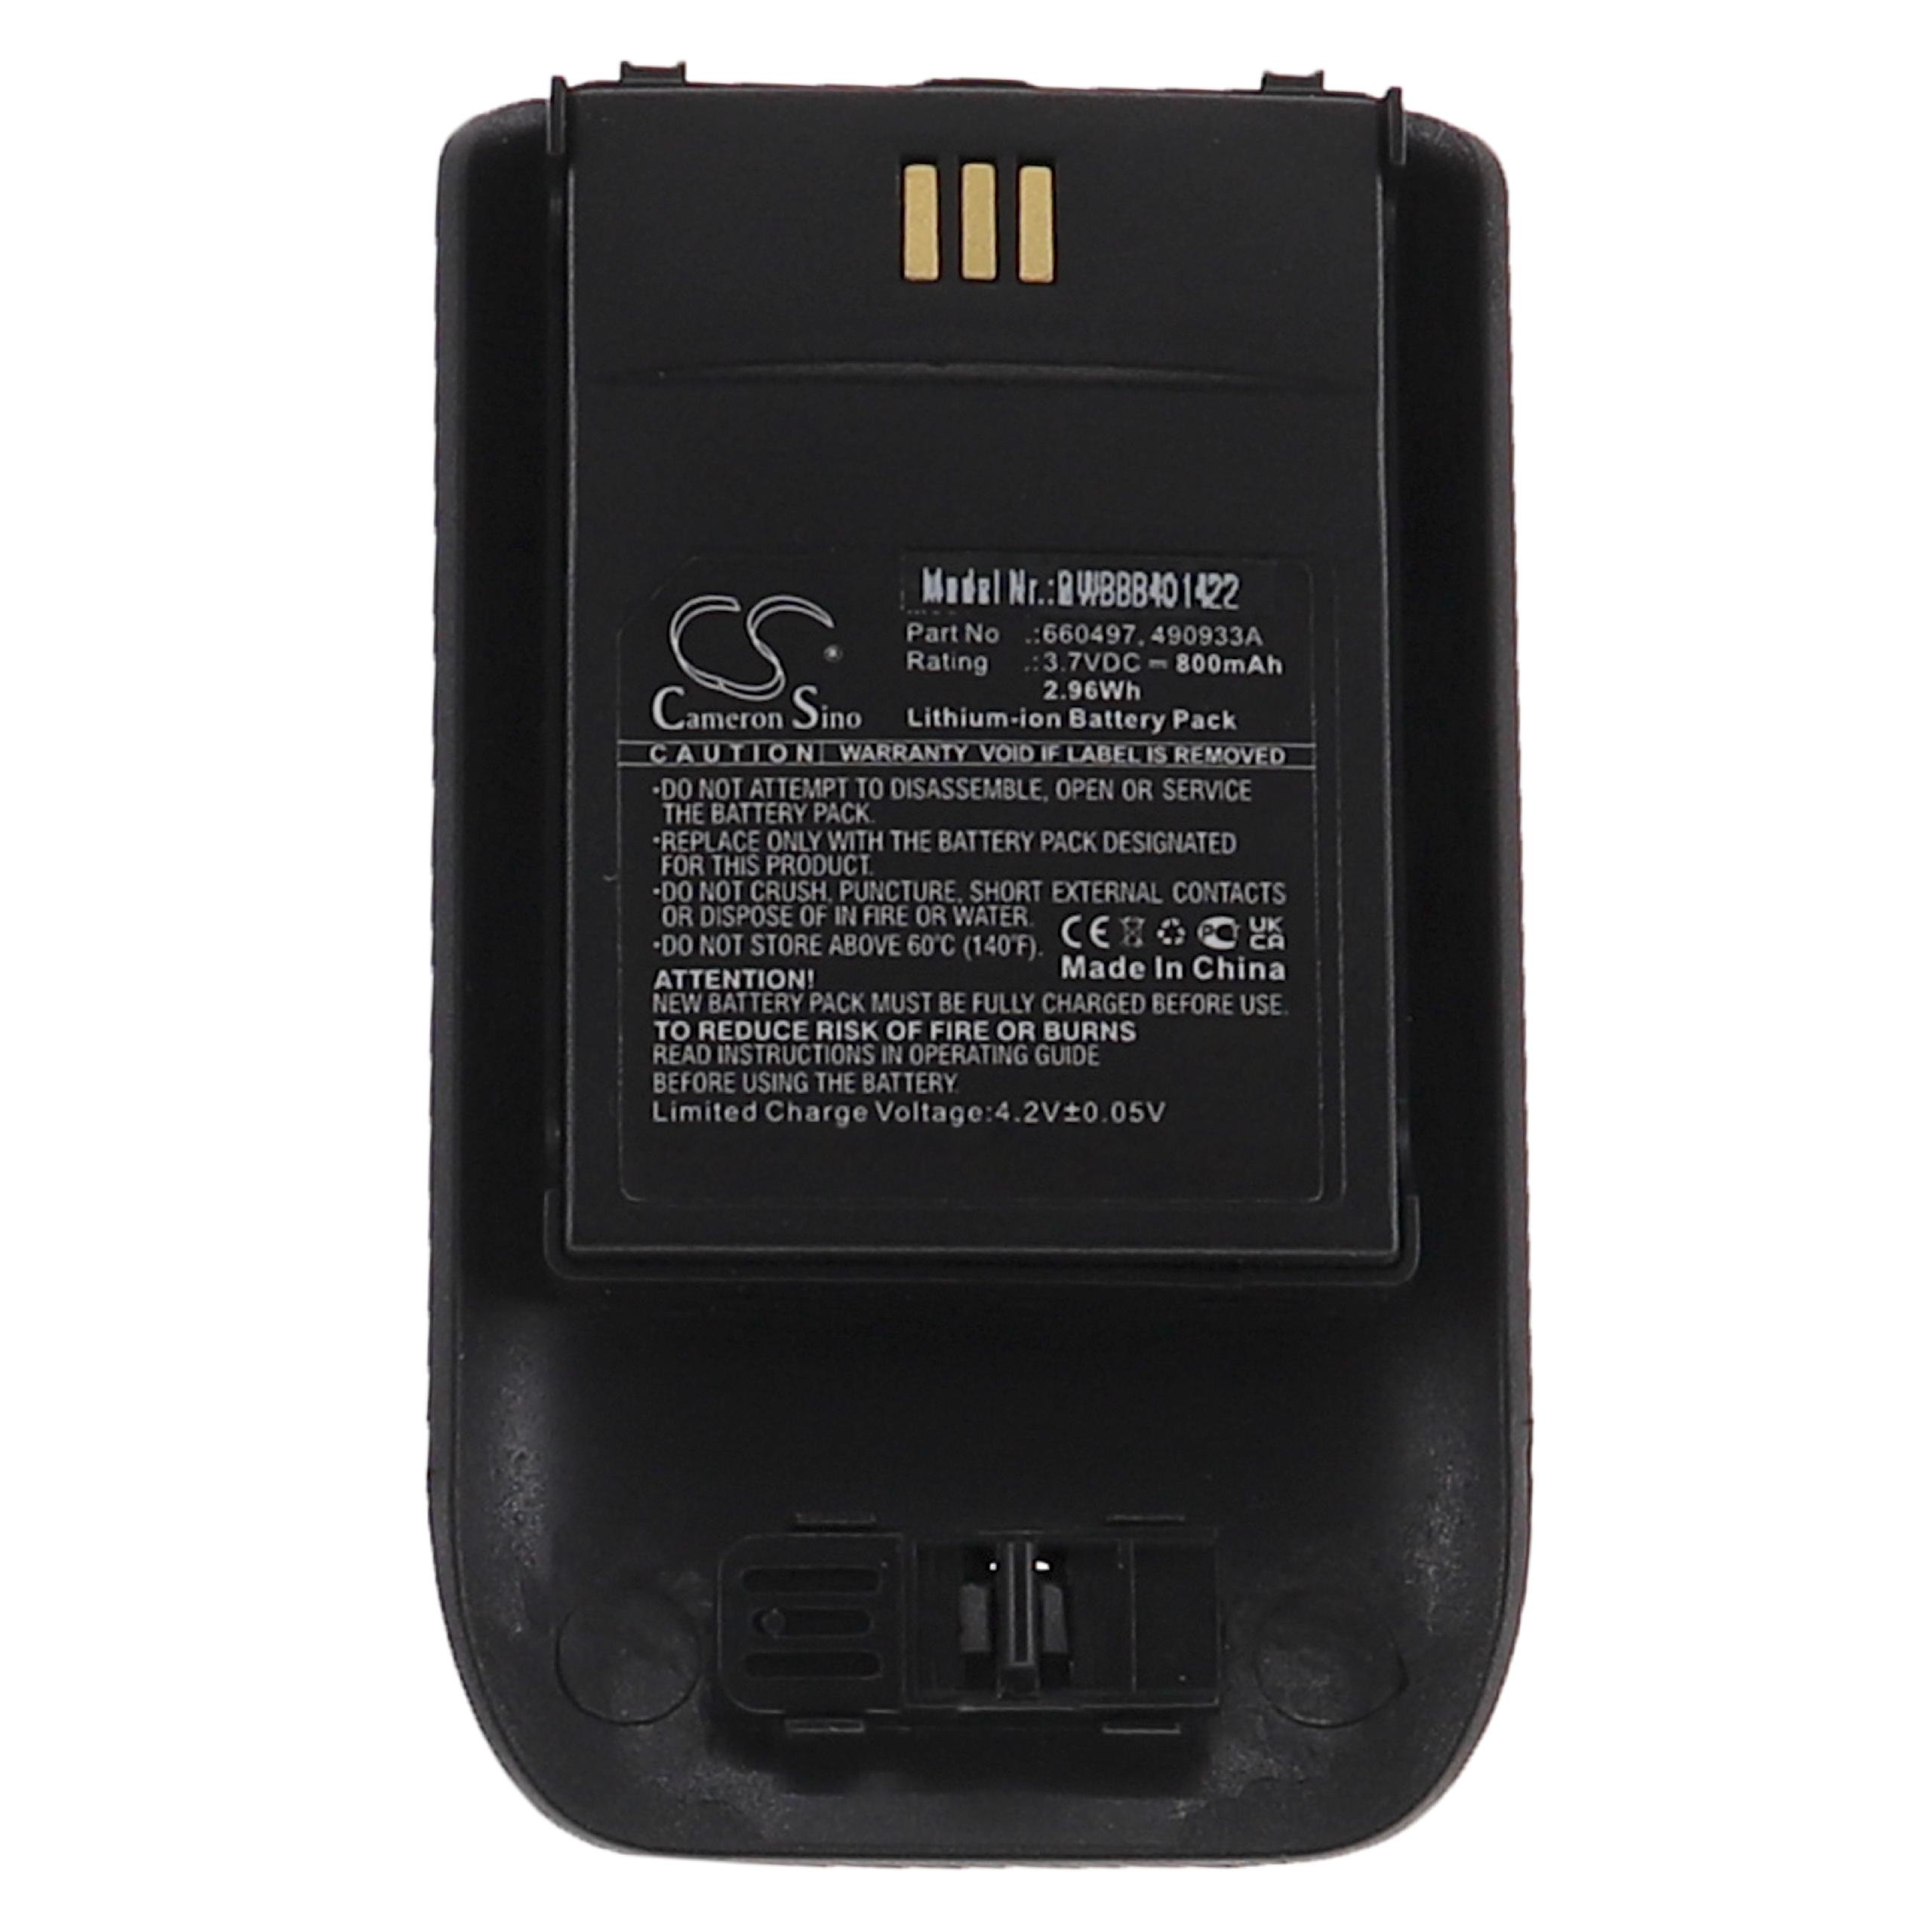 Landline Phone Battery Replacement for Ascom 490933A, 660497 - 800mAh 3.7V Li-Ion